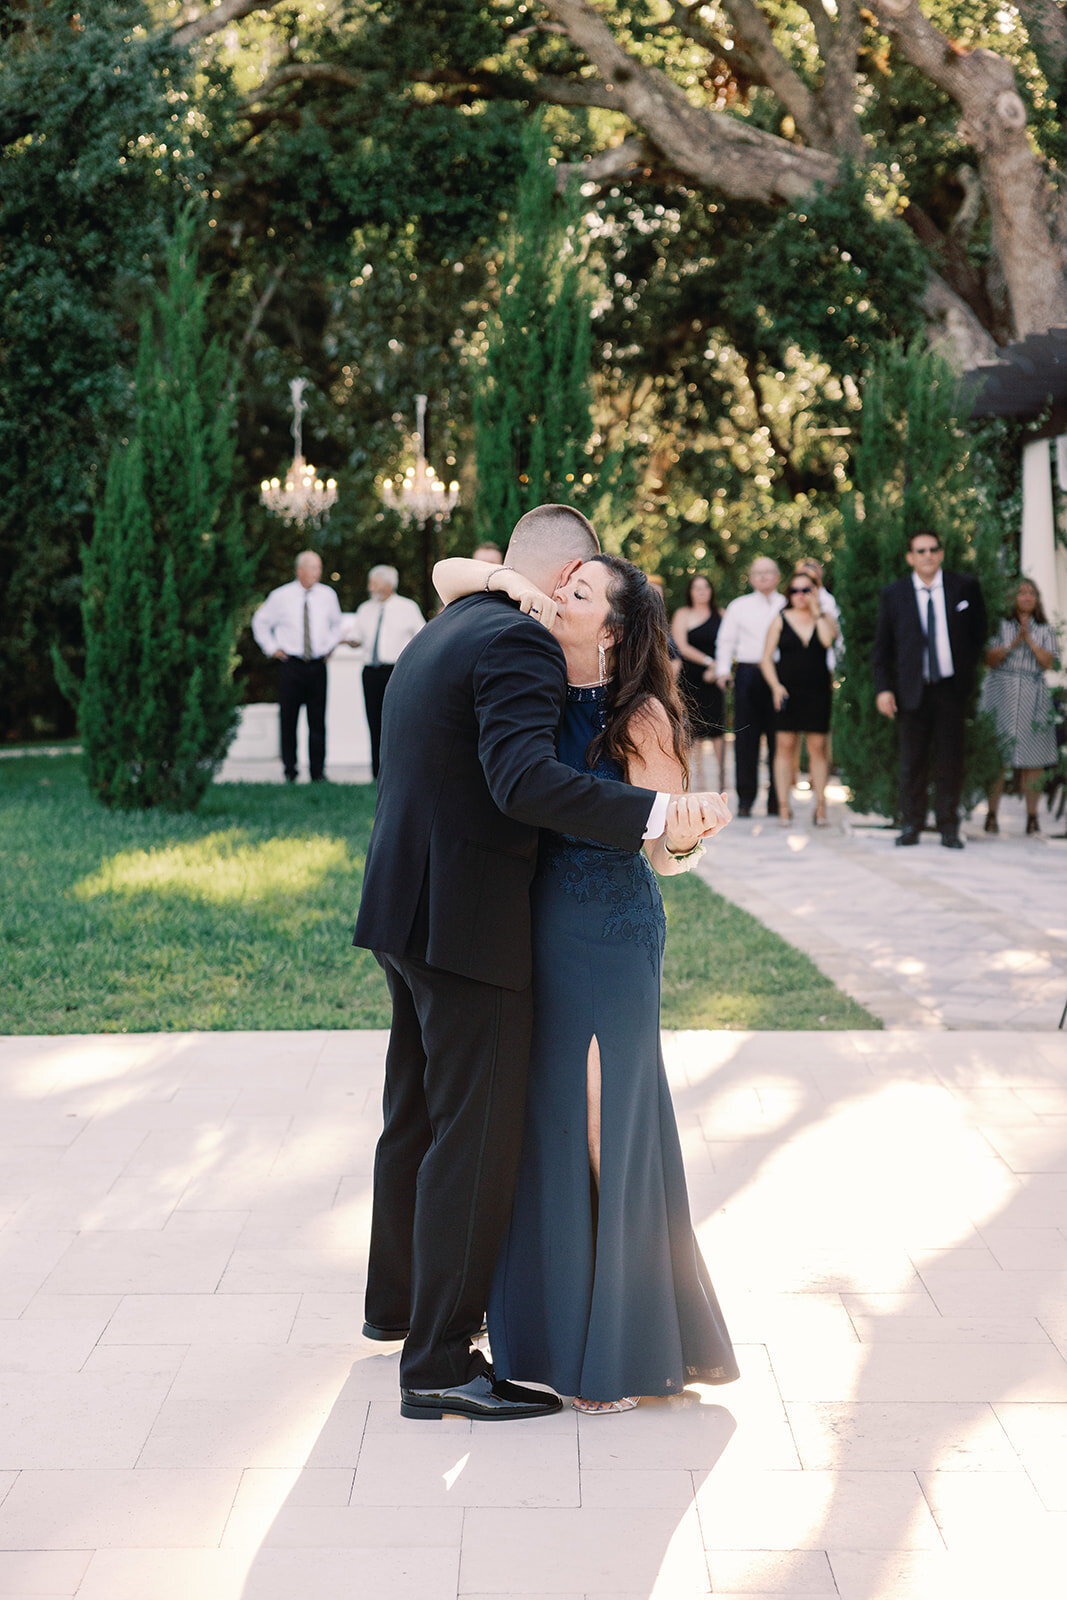 CORNELIA ZAISS PHOTOGRAPHY LEAH + ROBERT'S WEDDING 1135_websize